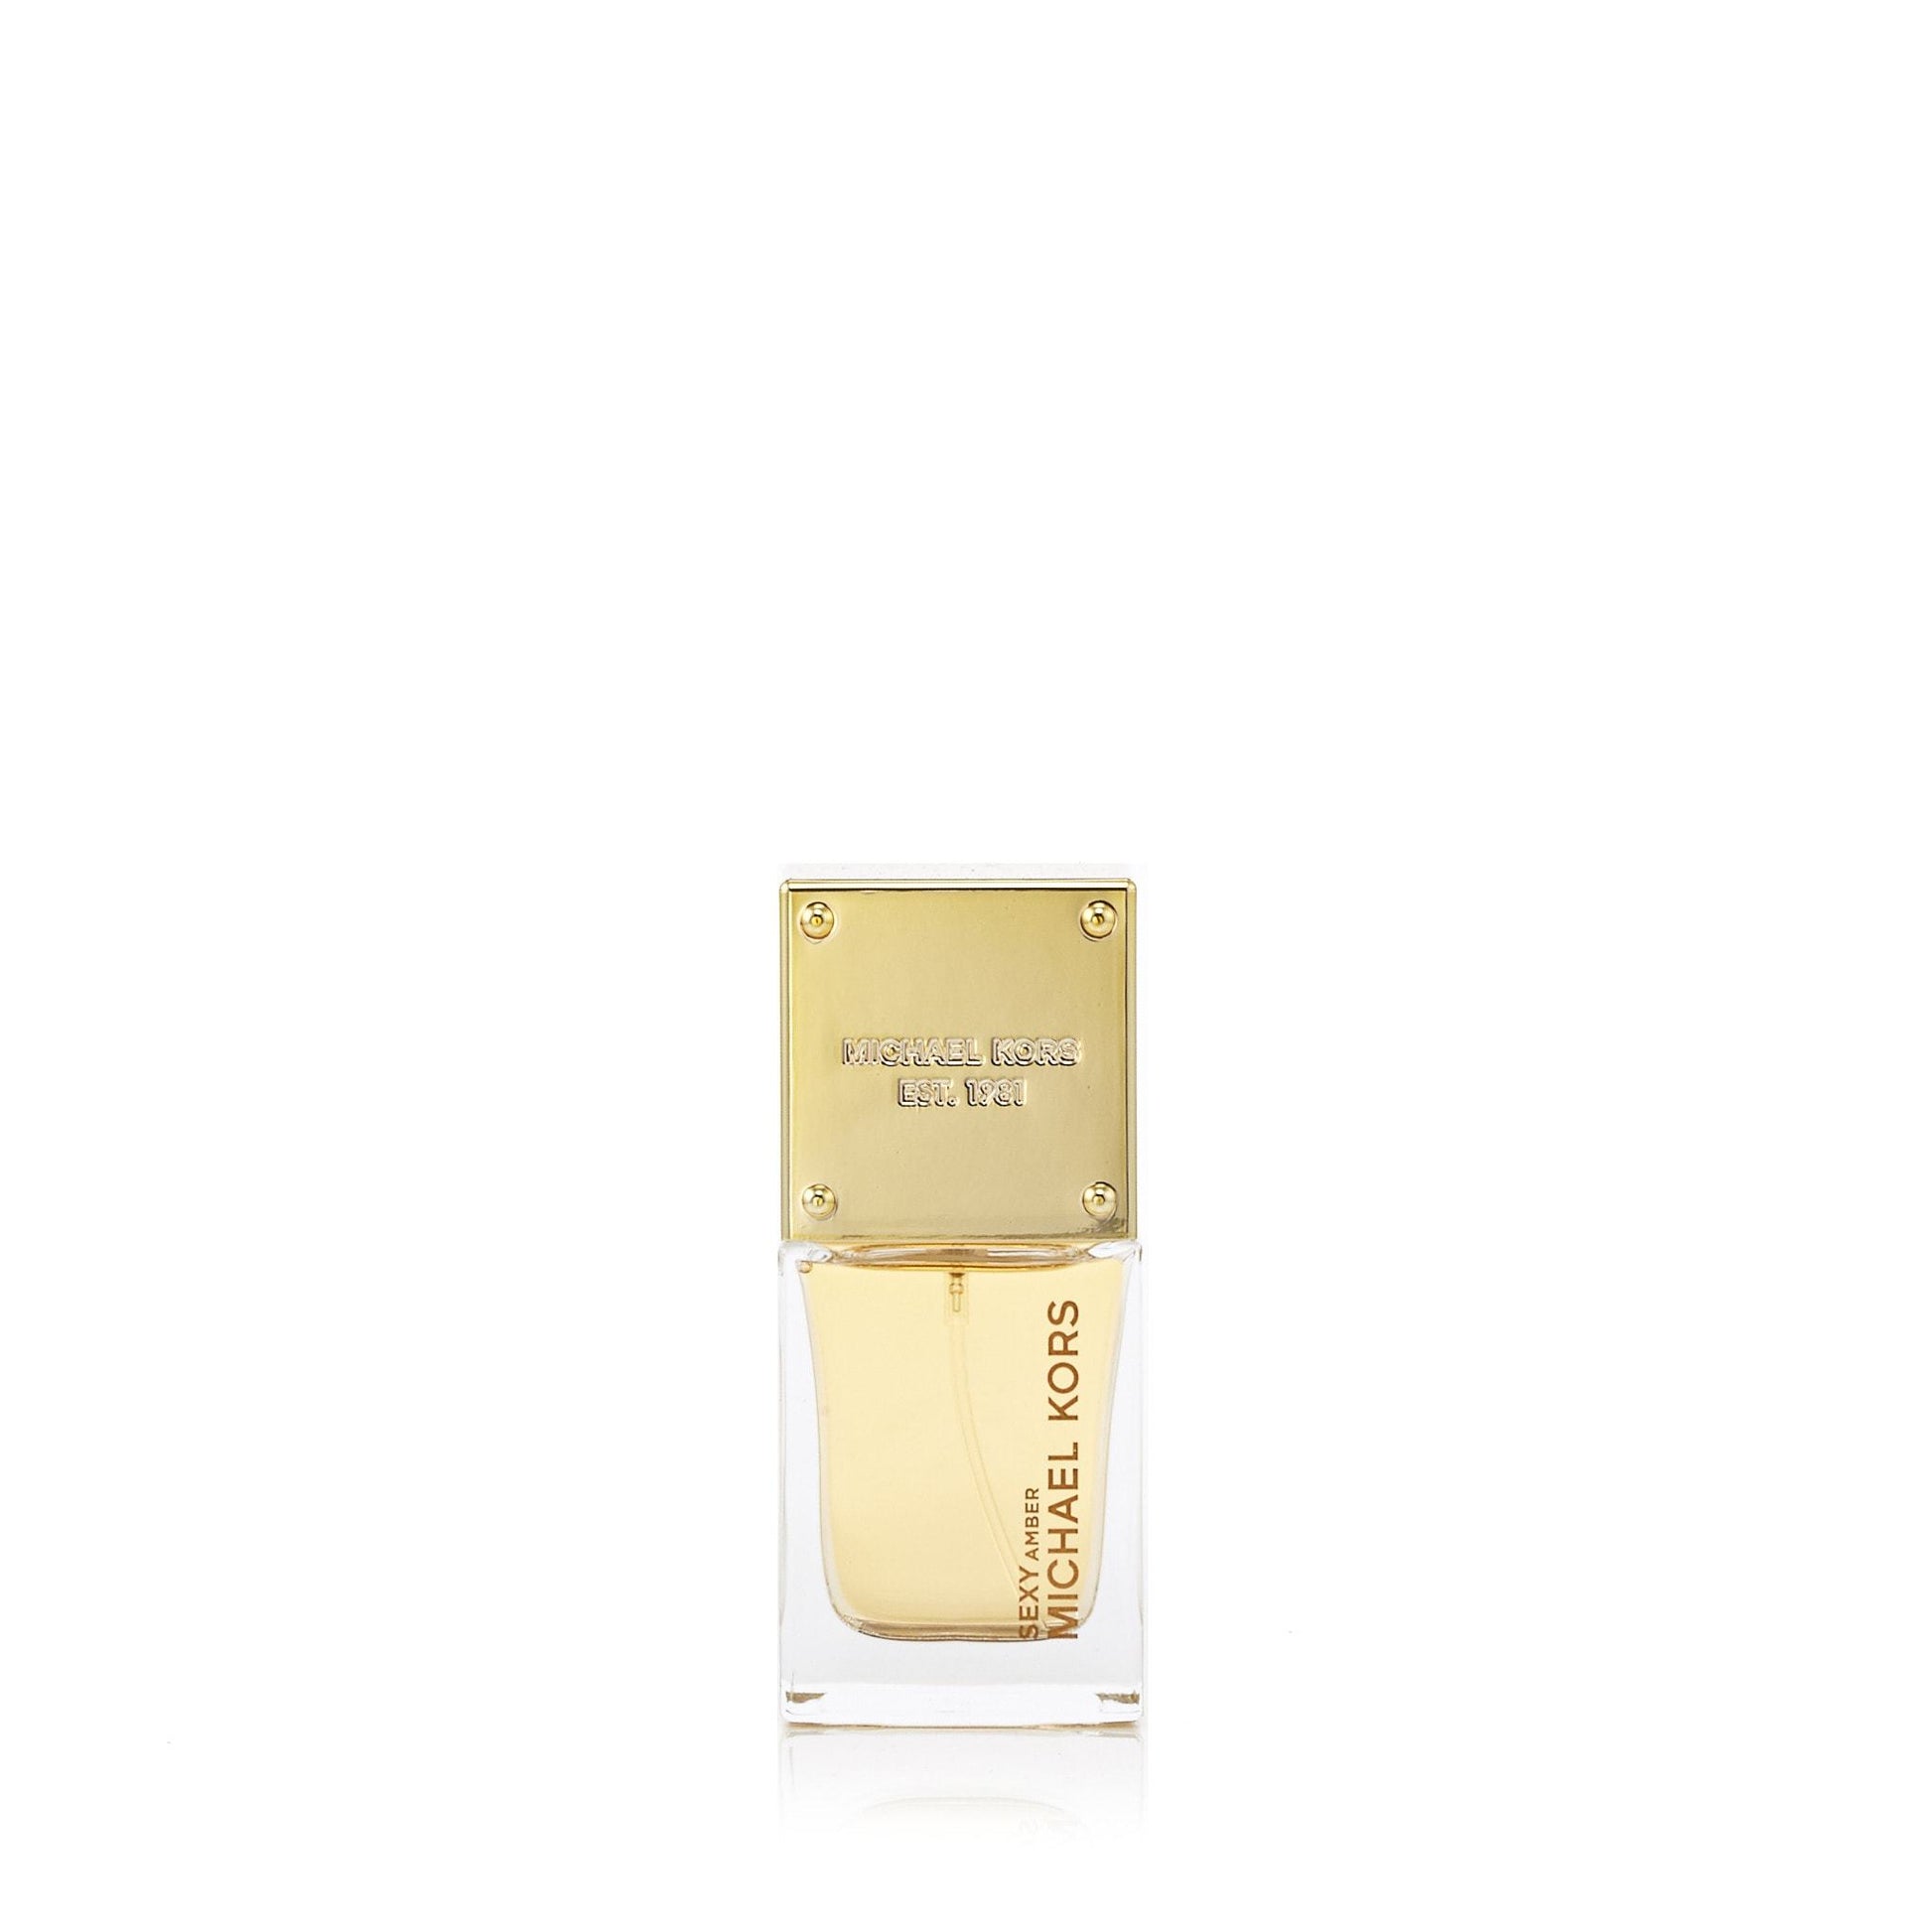 Sexy Amber Eau de Parfum Spray for Women by Michael Kors, Product image 2